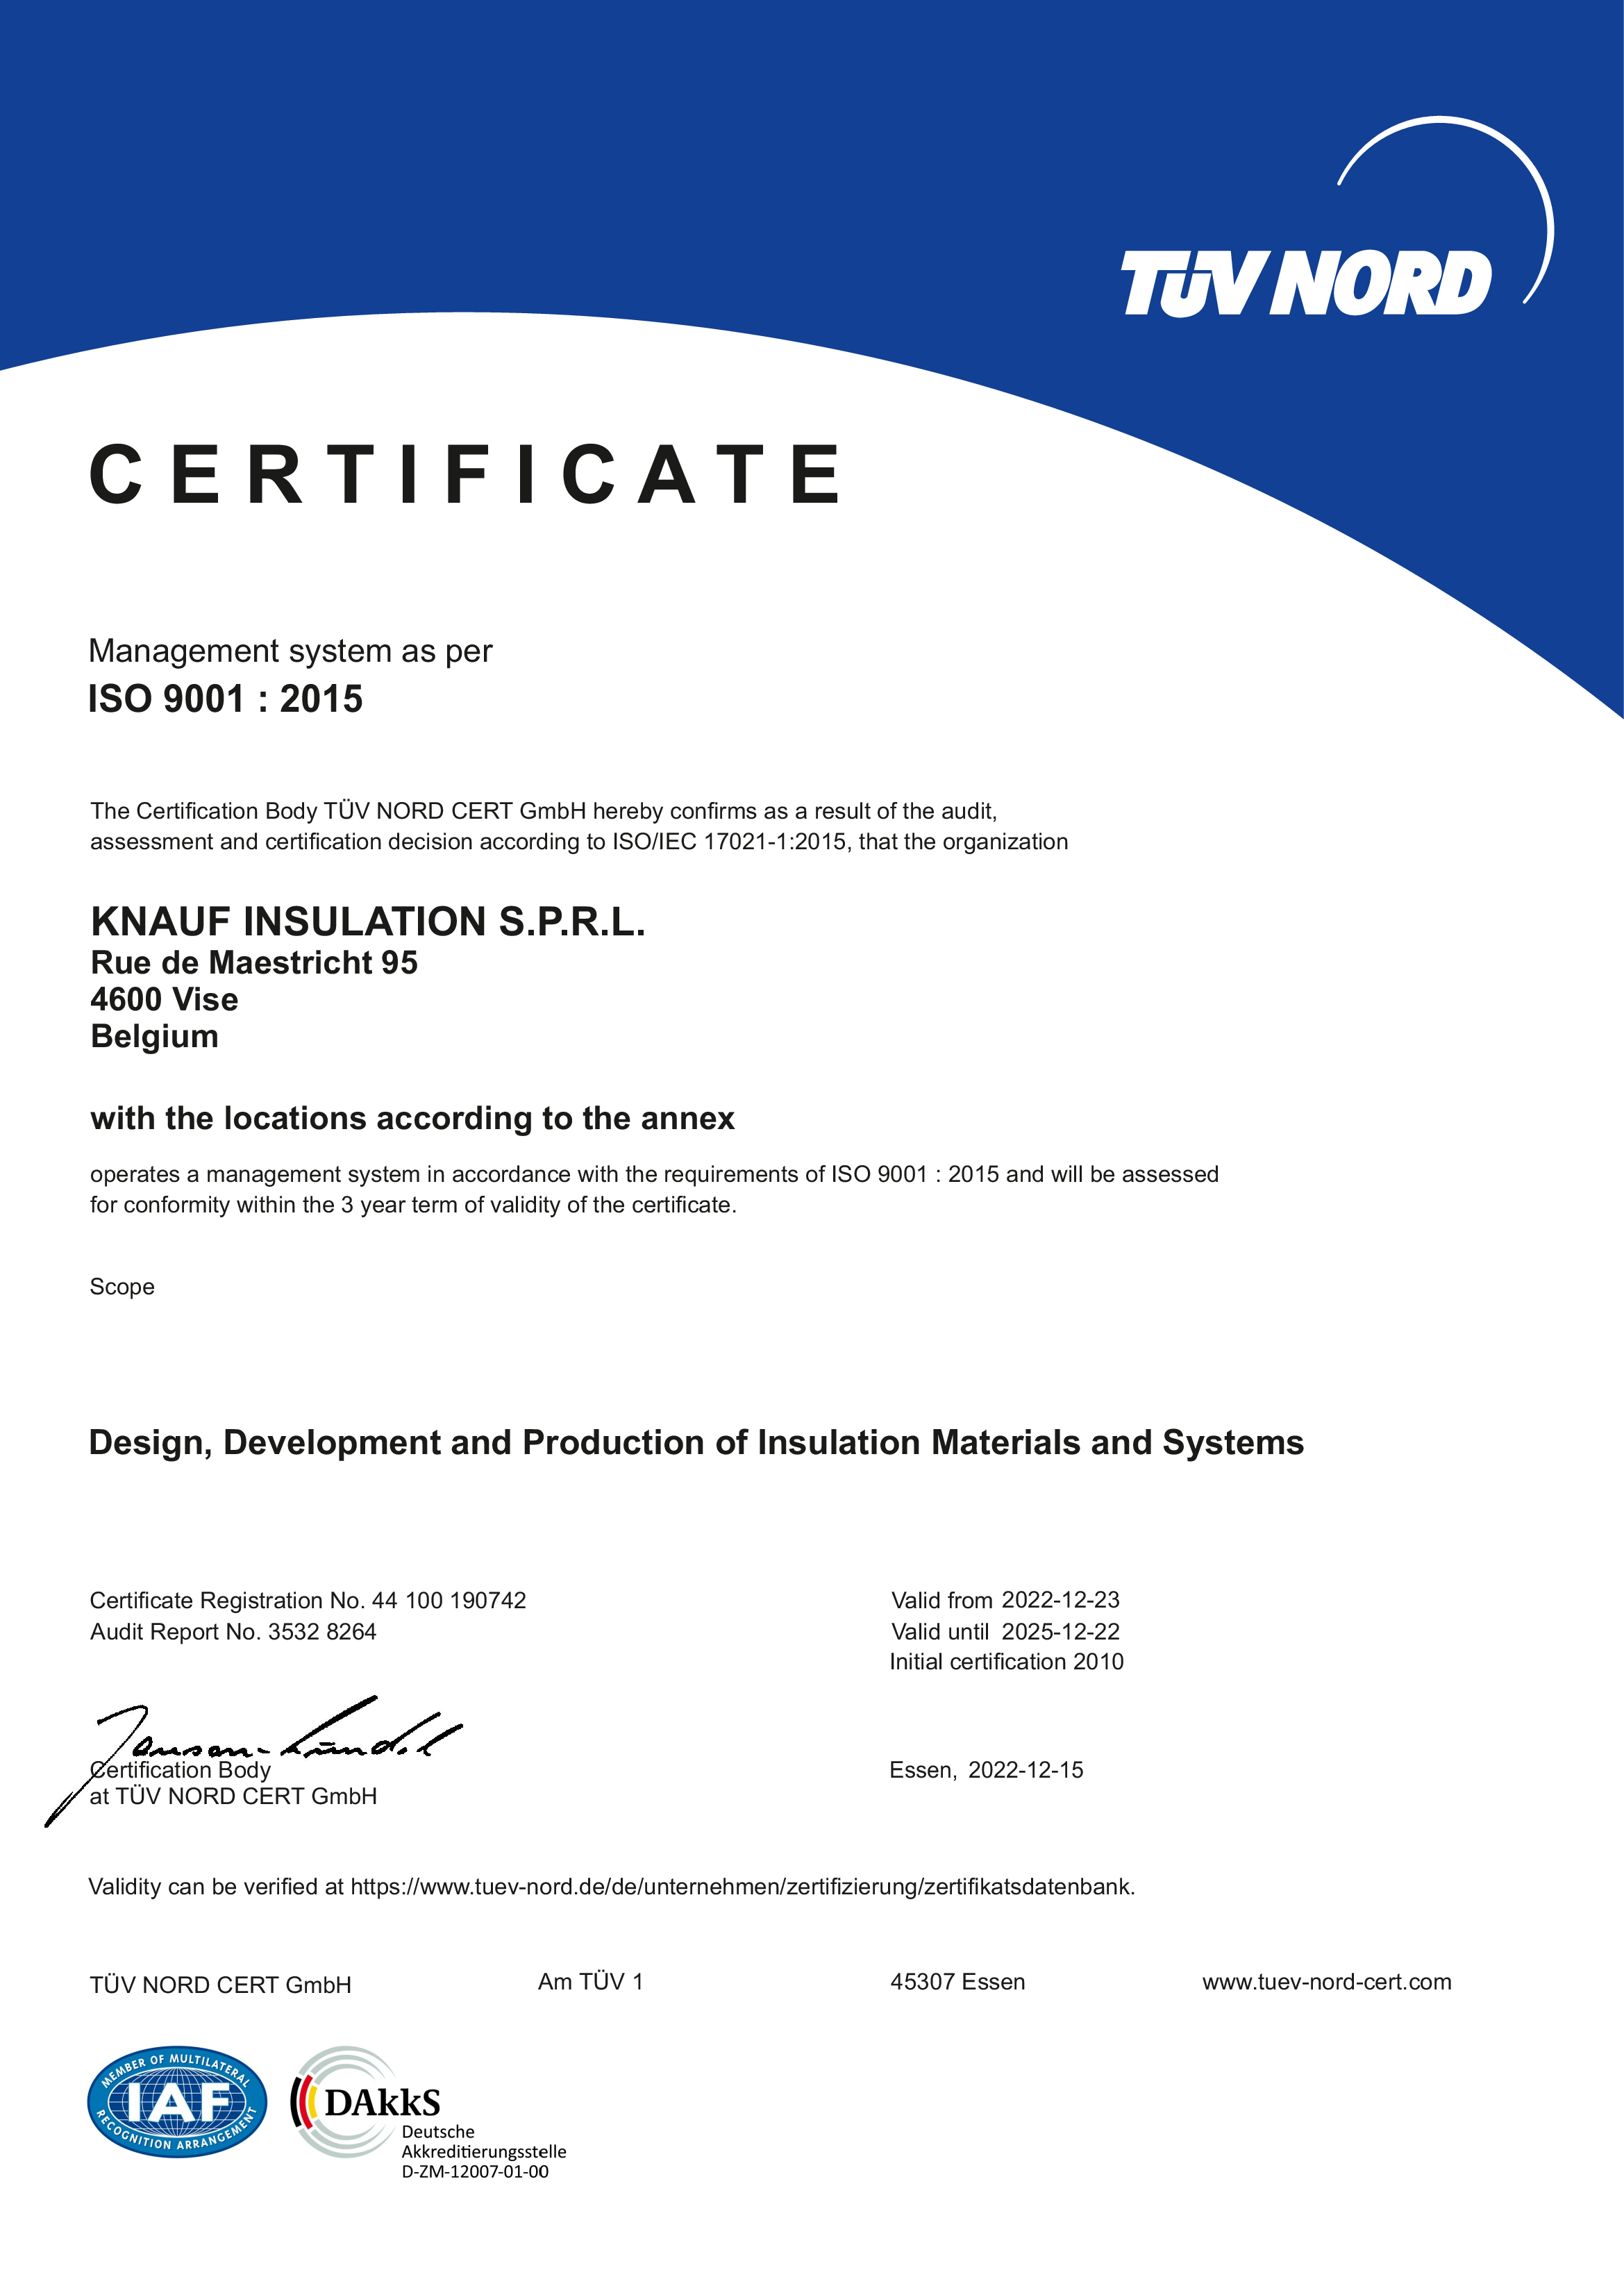 Knauf Insulation ISO 9001